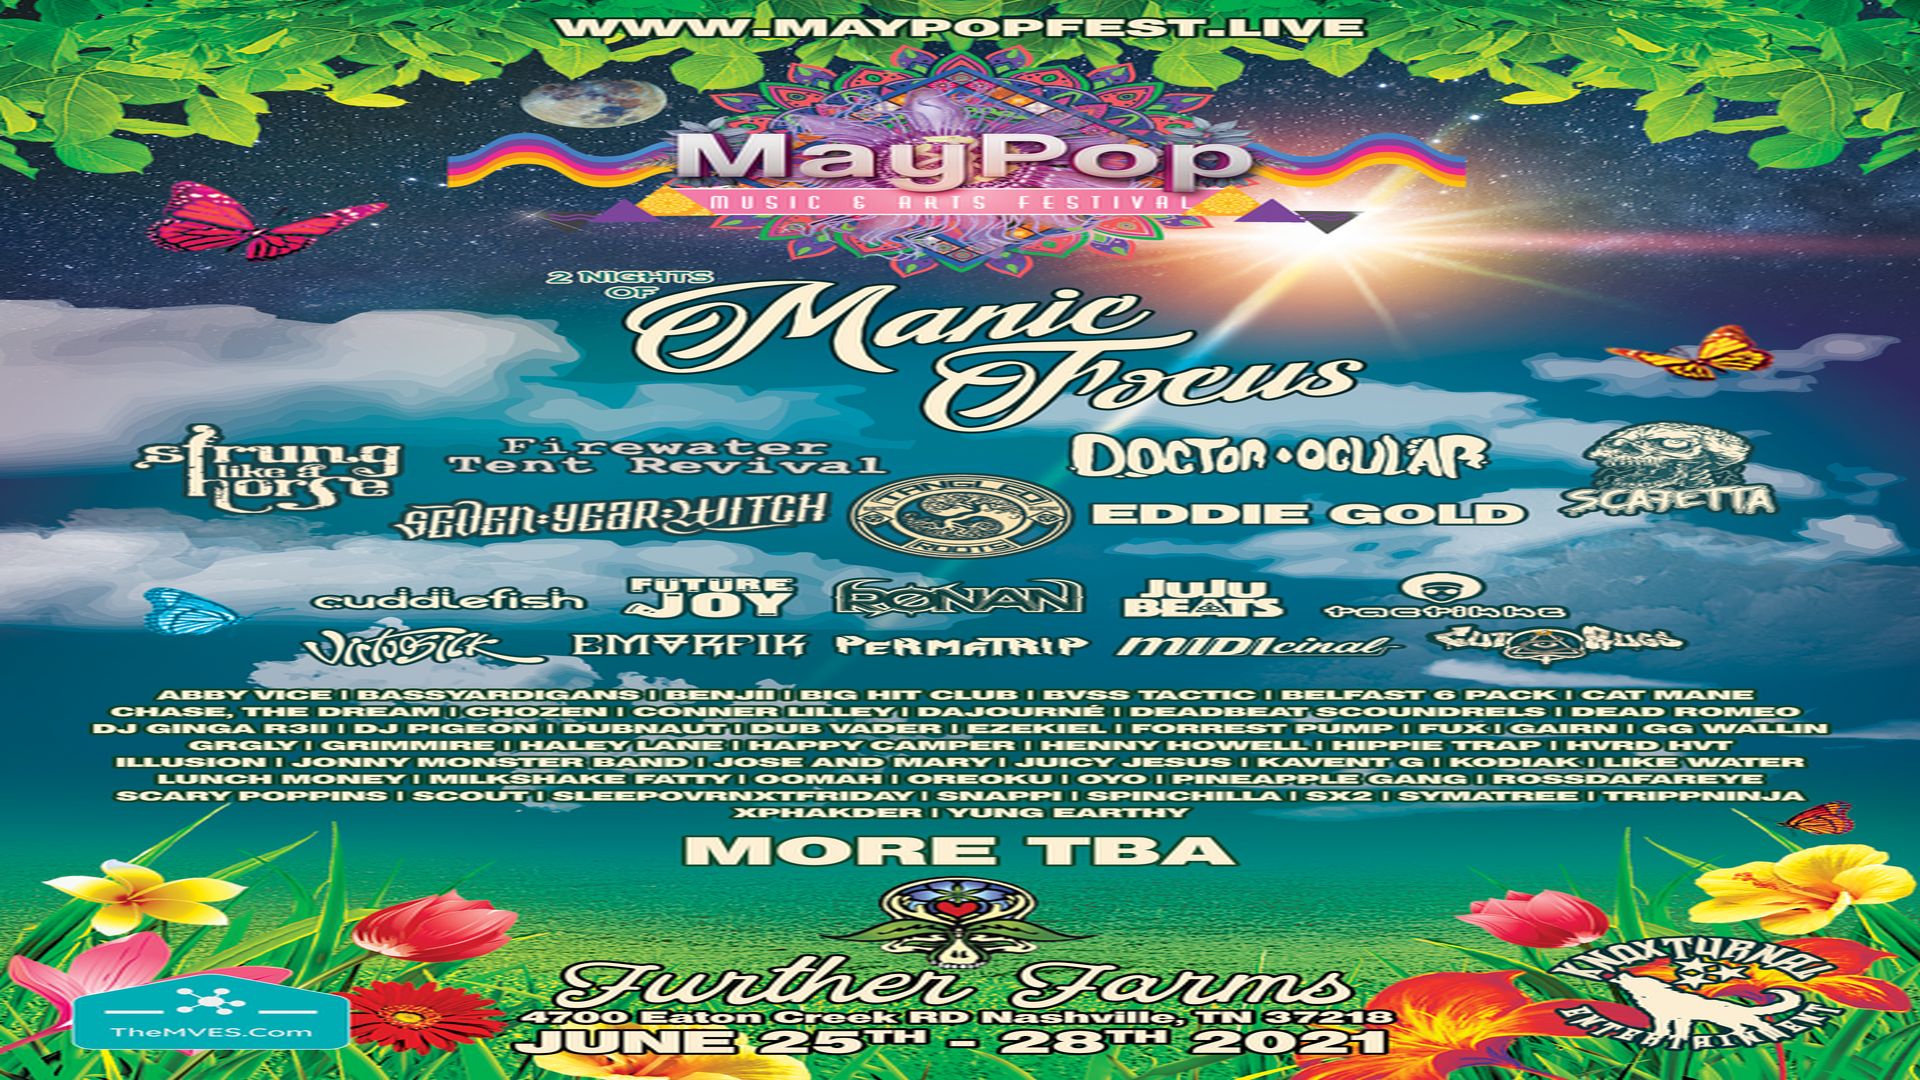 Maypop Music and Arts Festival 2021 Nashville, Tennessee, Nashville, Tennessee, United States